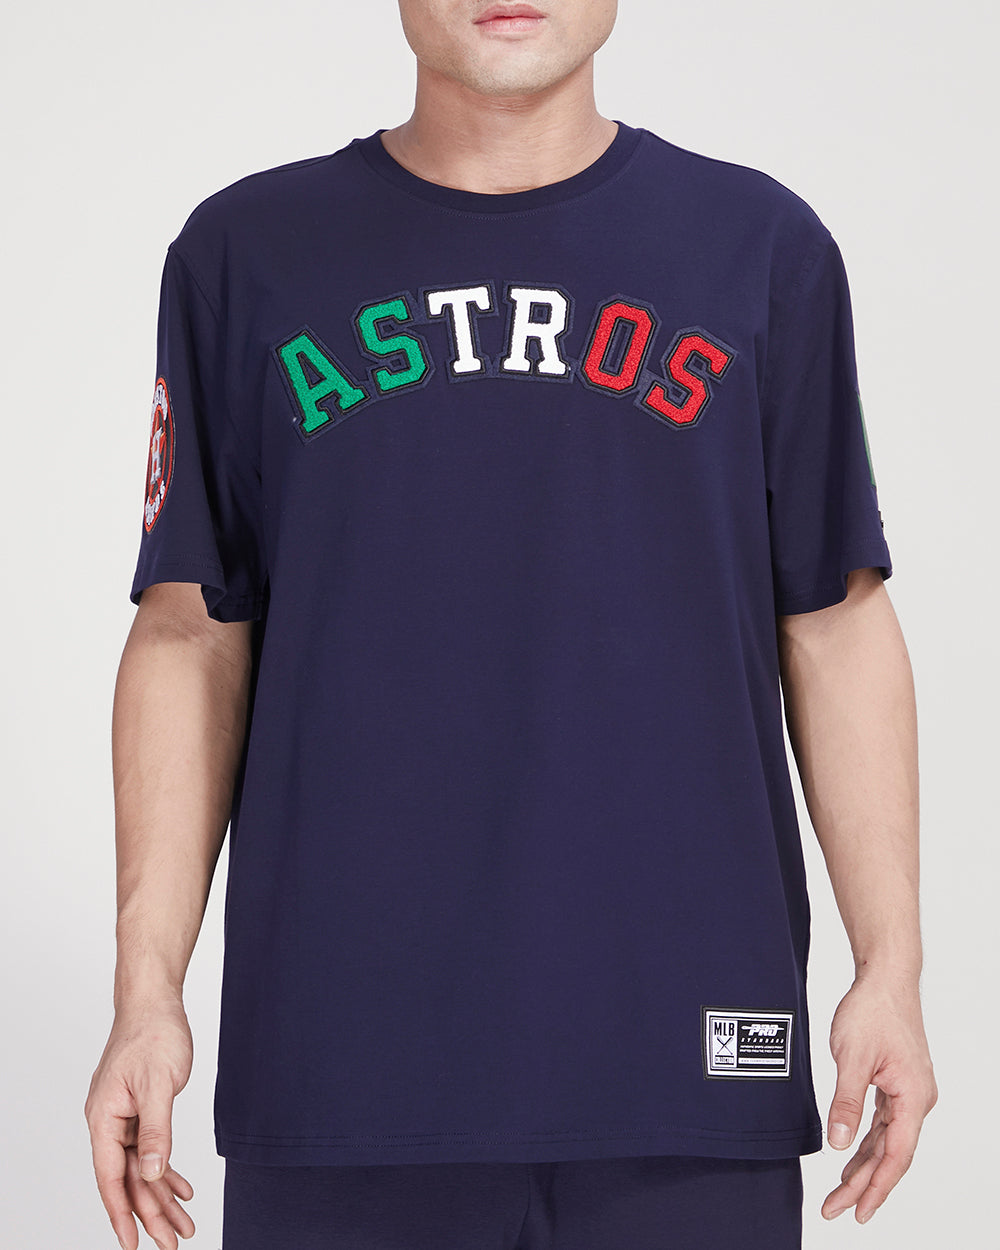 Pro Standard Astros Chrome T-Shirt - Men's